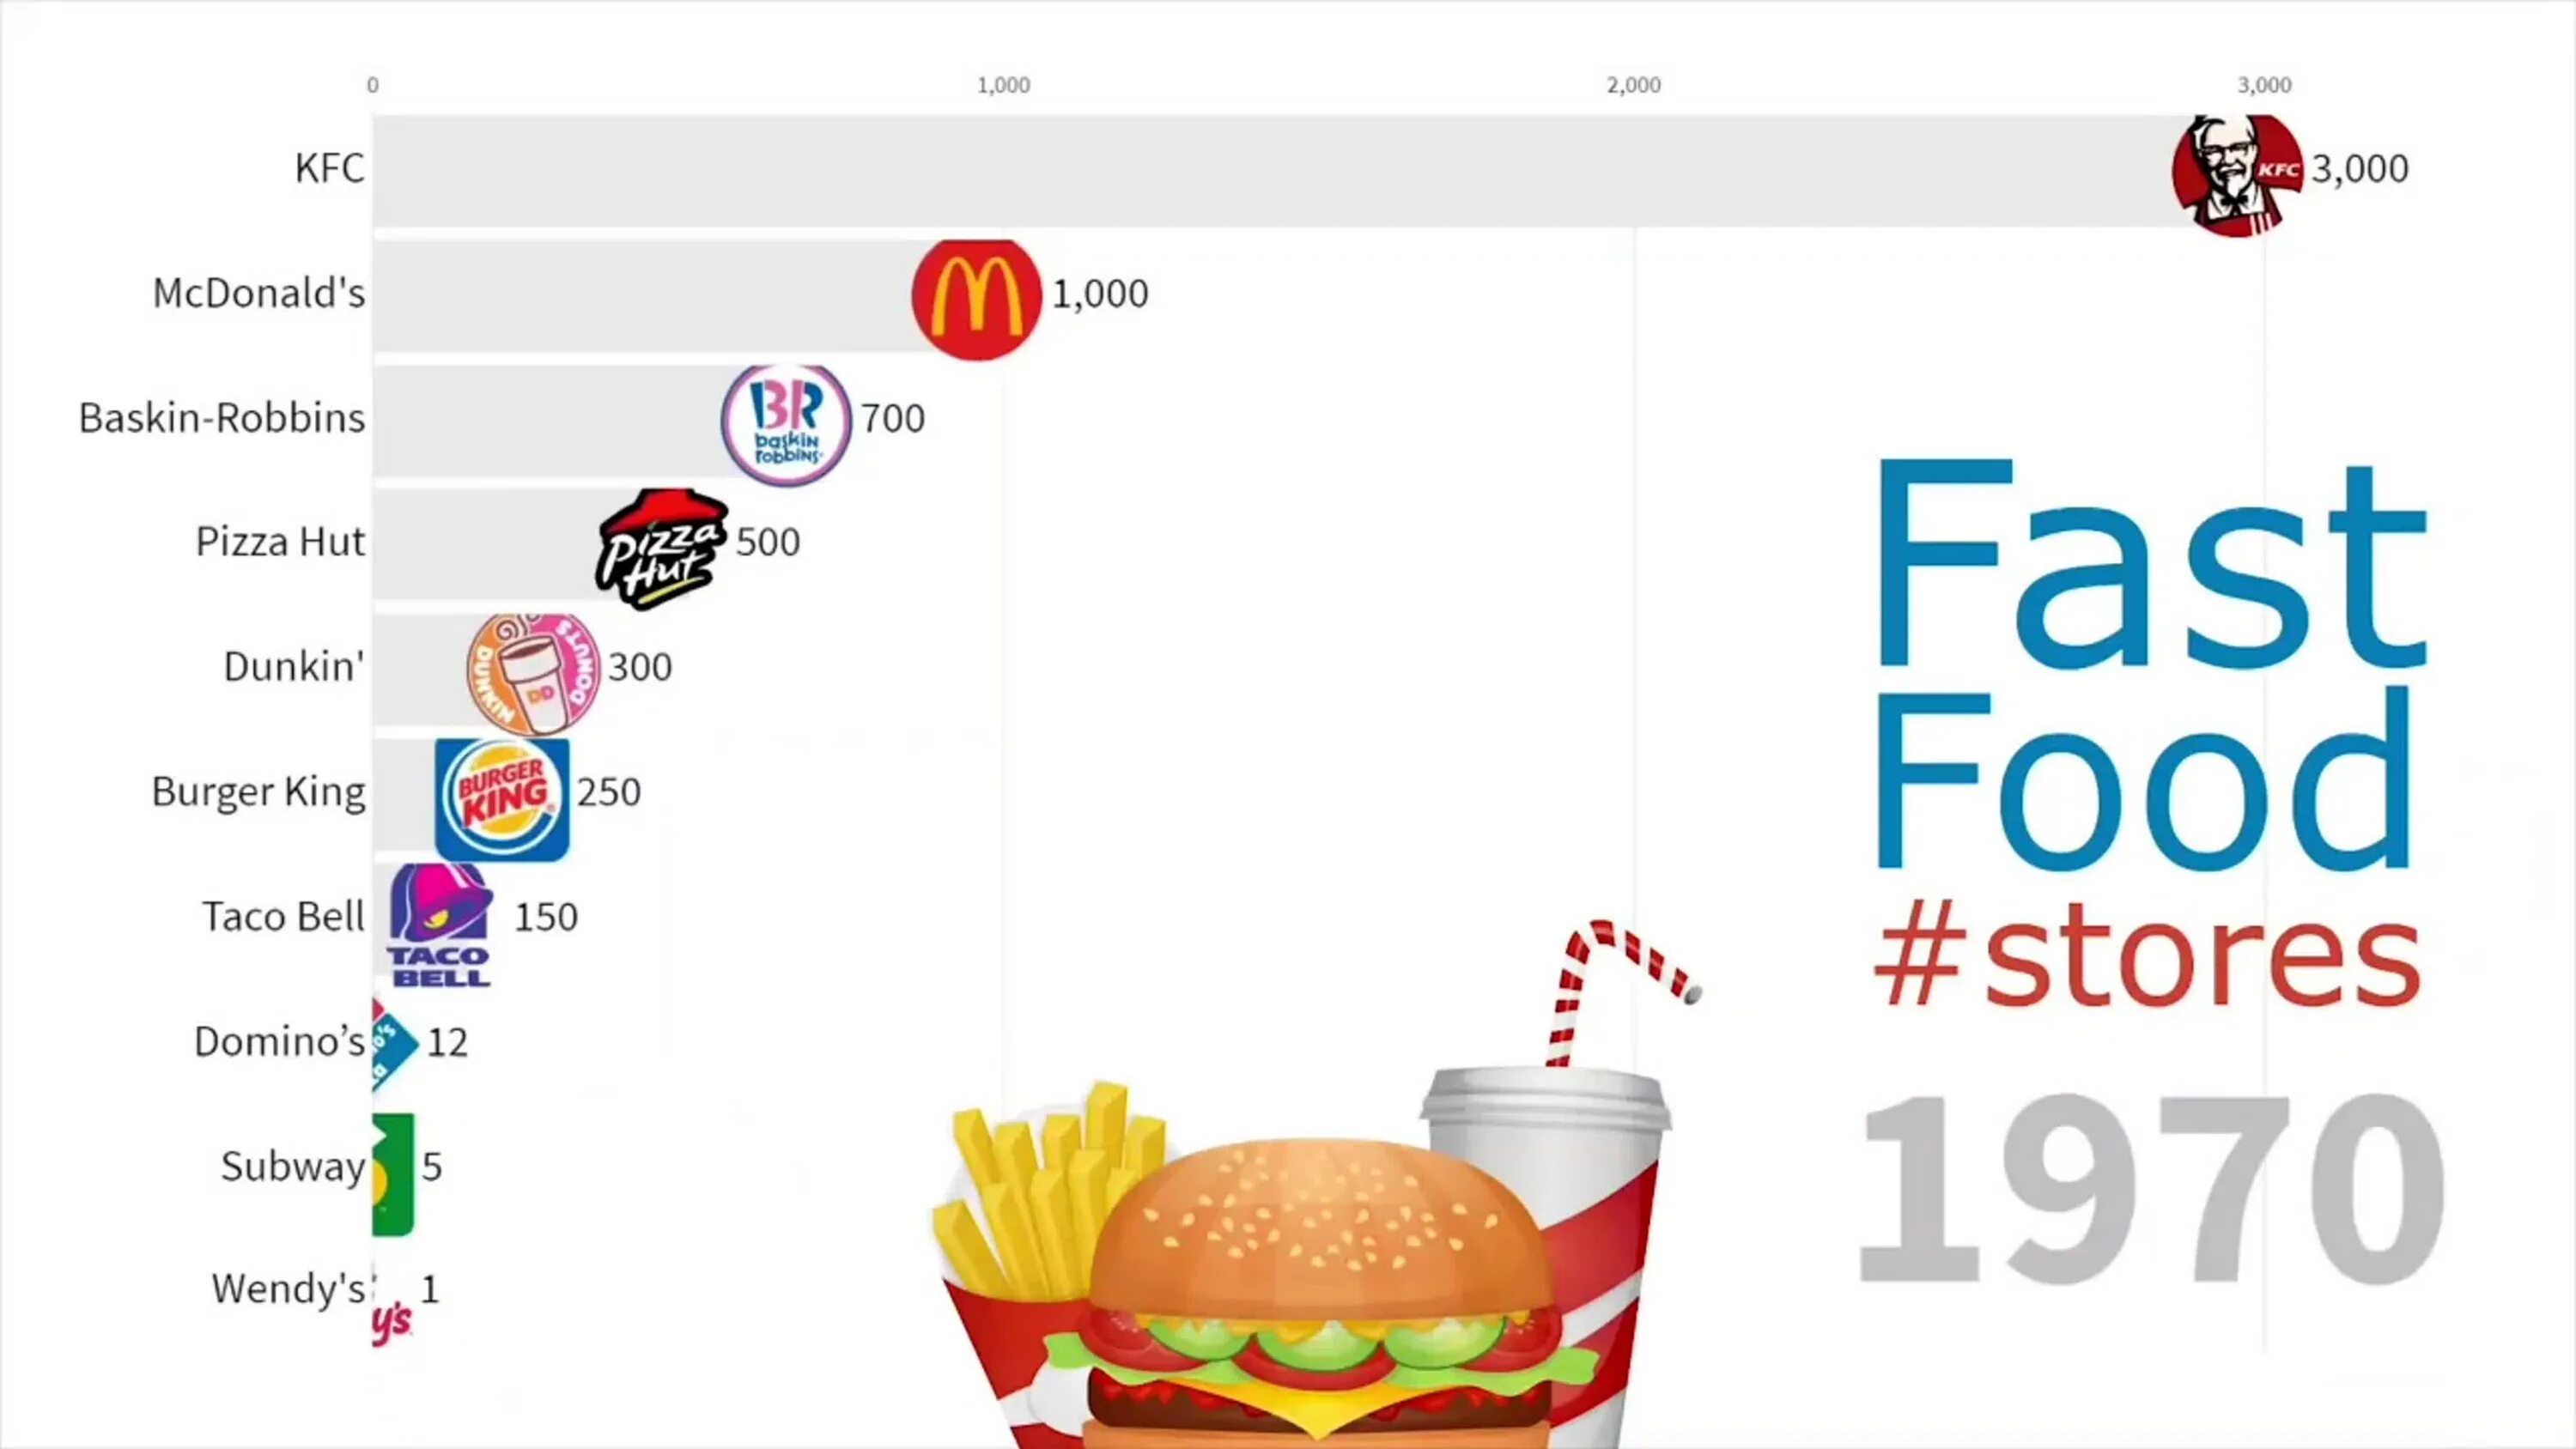 Топ фаст. Fast food brands. Самая популярная сеть фаст фуда стран Европы на карте. Самый популярный сеть фаст фуд в странах Южной Америки на карте.